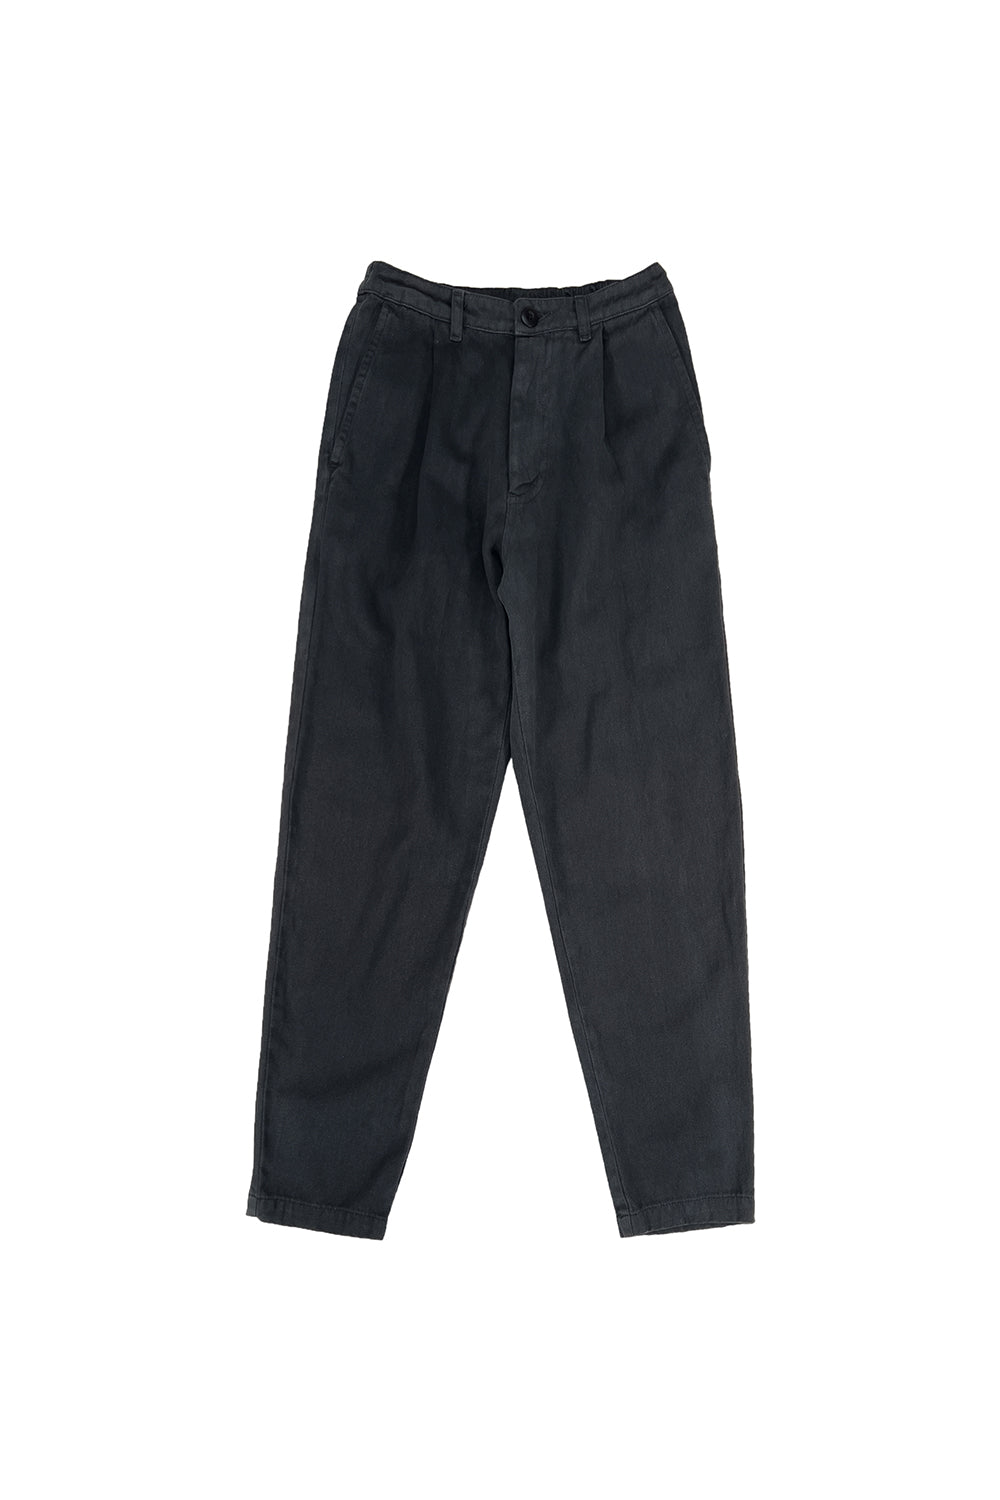 Acuma Pant | Jungmaven Hemp Clothing & Accessories / Color: Black